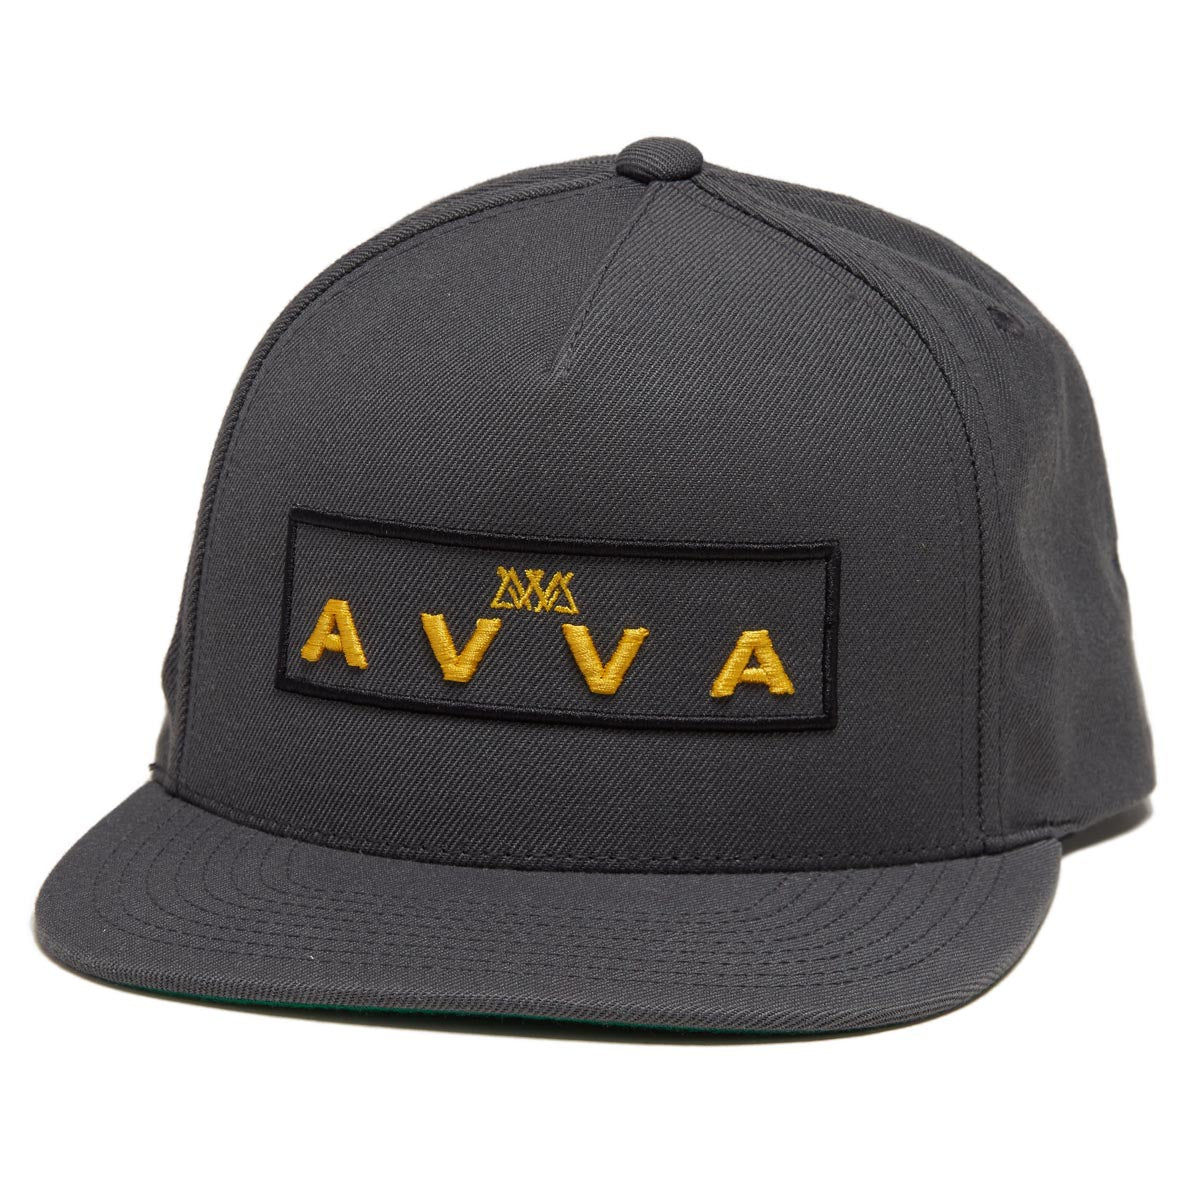 AVVA Steamer Lane Snapback Hat - Gunmetal Grey image 1